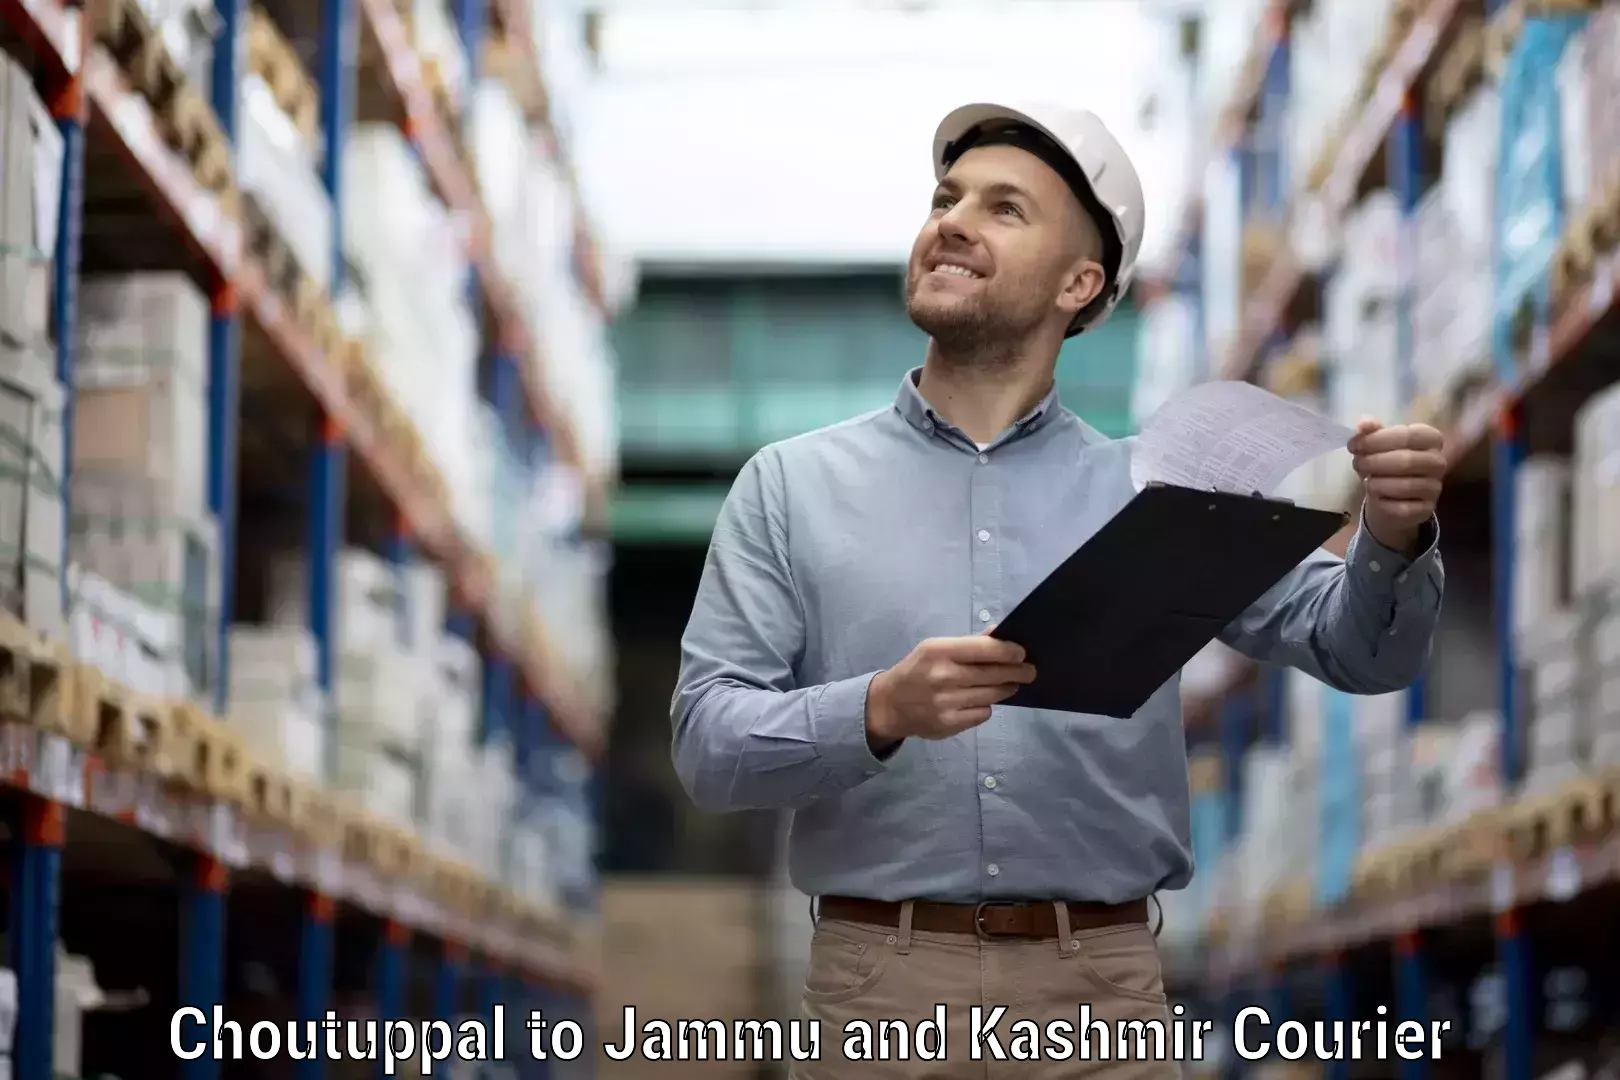 Courier service partnerships Choutuppal to Jammu and Kashmir